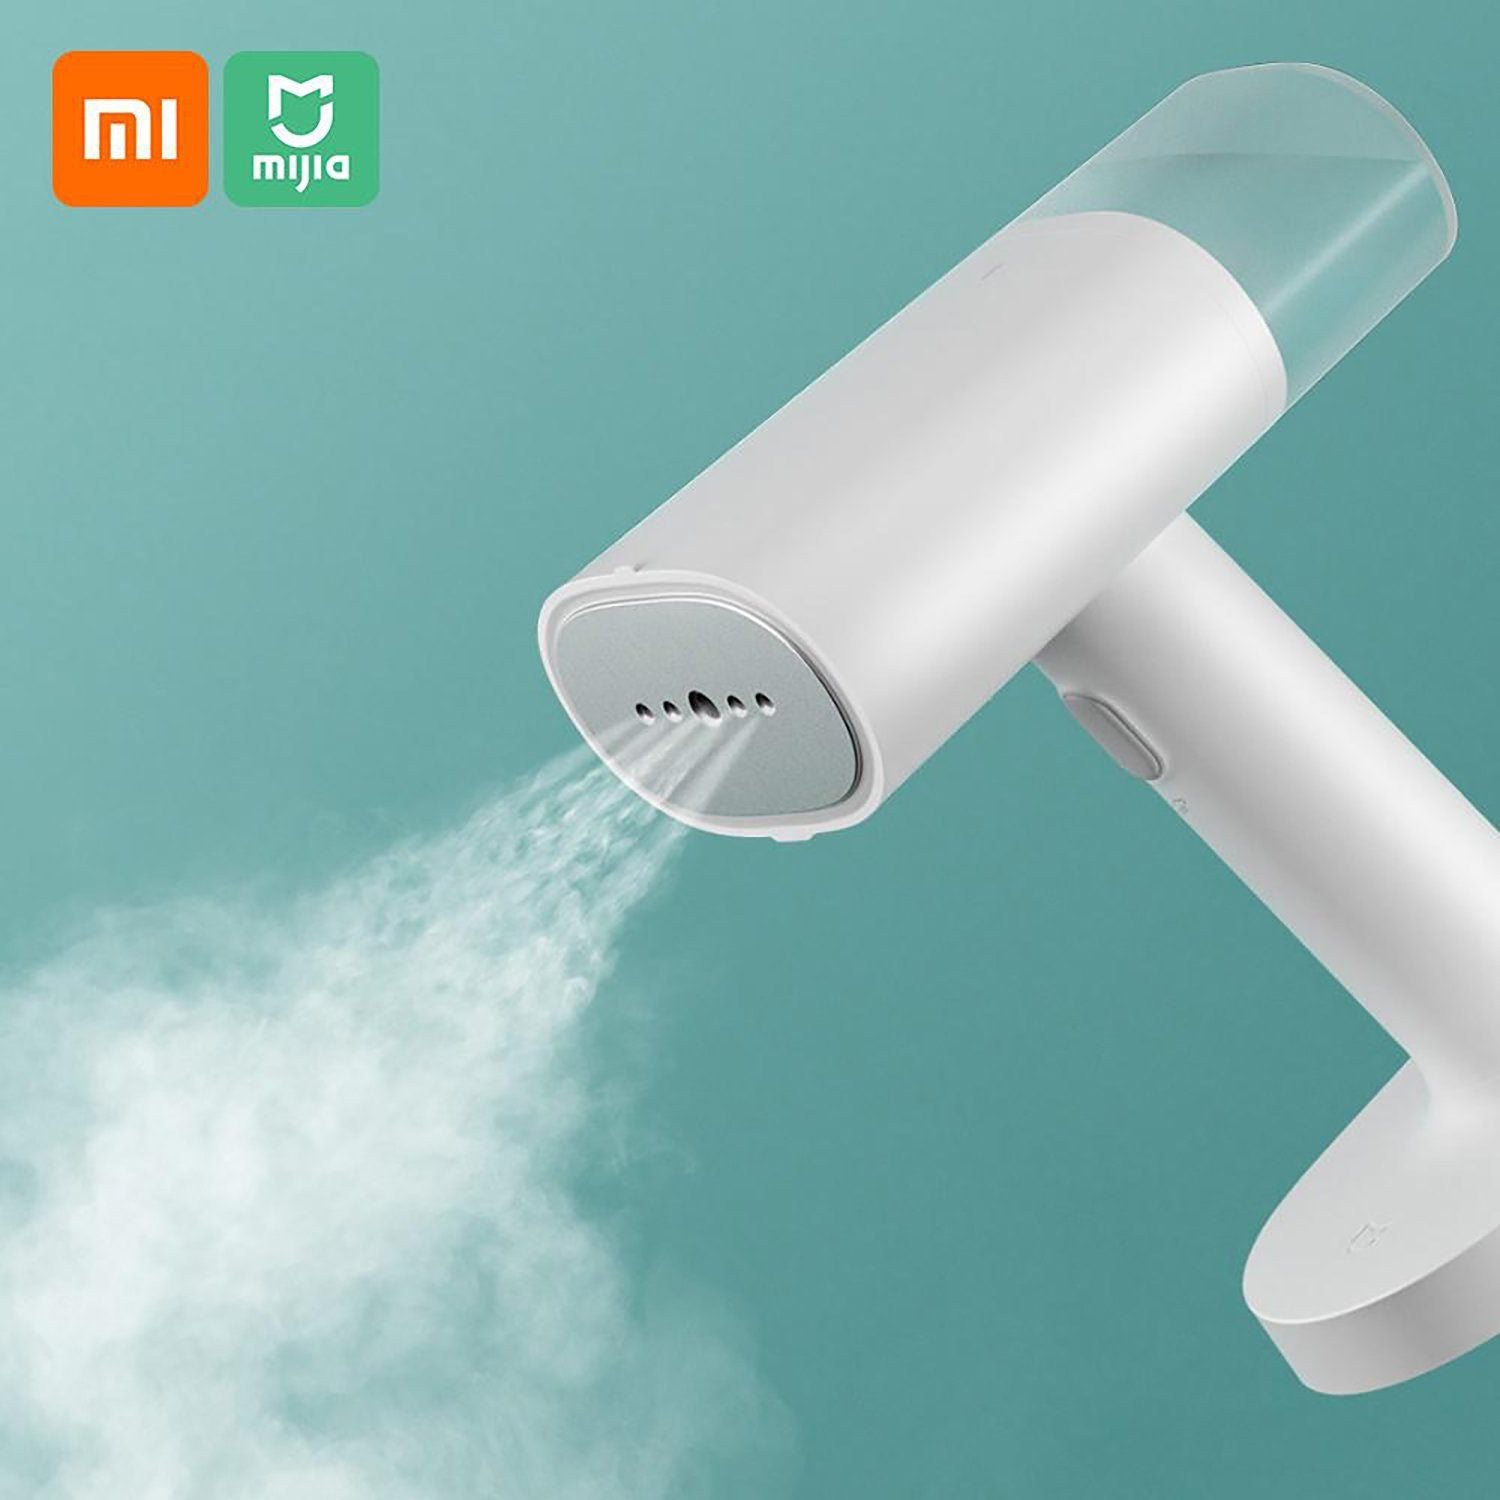 Xiaomi Mijia Electric Iron Steamer Handheld Garment Cleaner Hanging Ironing 1200W, White Default Xiaomi 